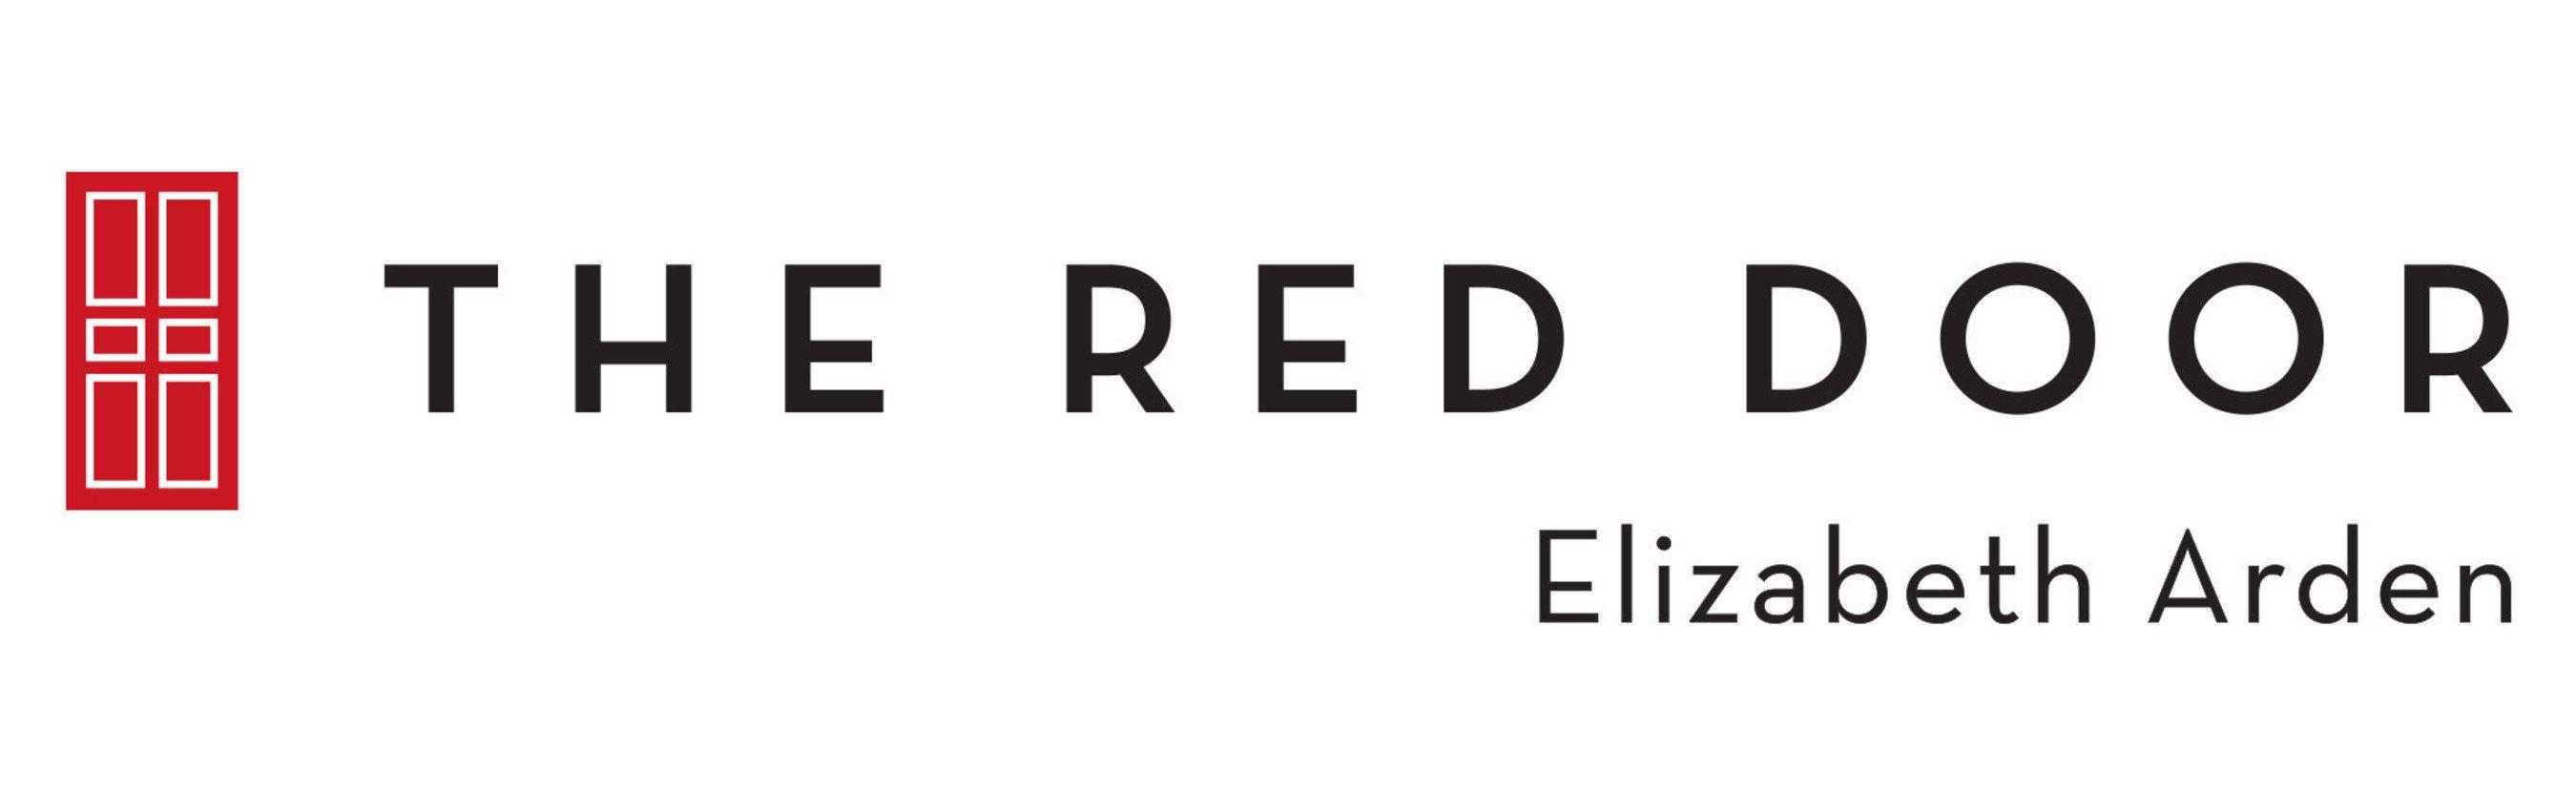 Elizabeth Arden Logo - The Red Door by Elizabeth Arden Launches New Brand Campaign & Omni ...